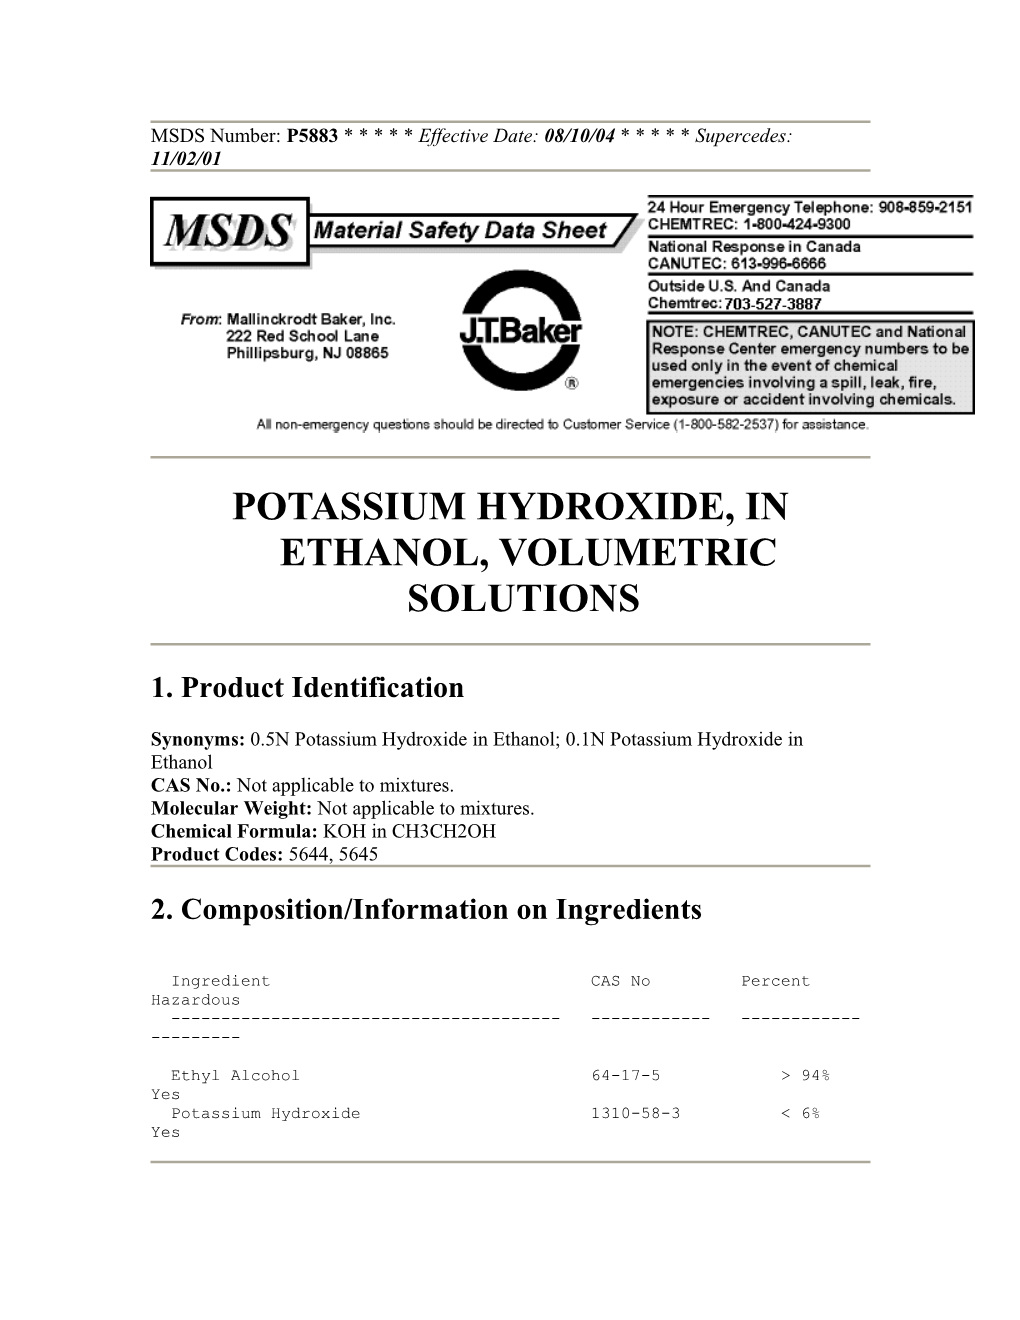 Potassium Hydroxide, in Ethanol, Volumetric Solutions